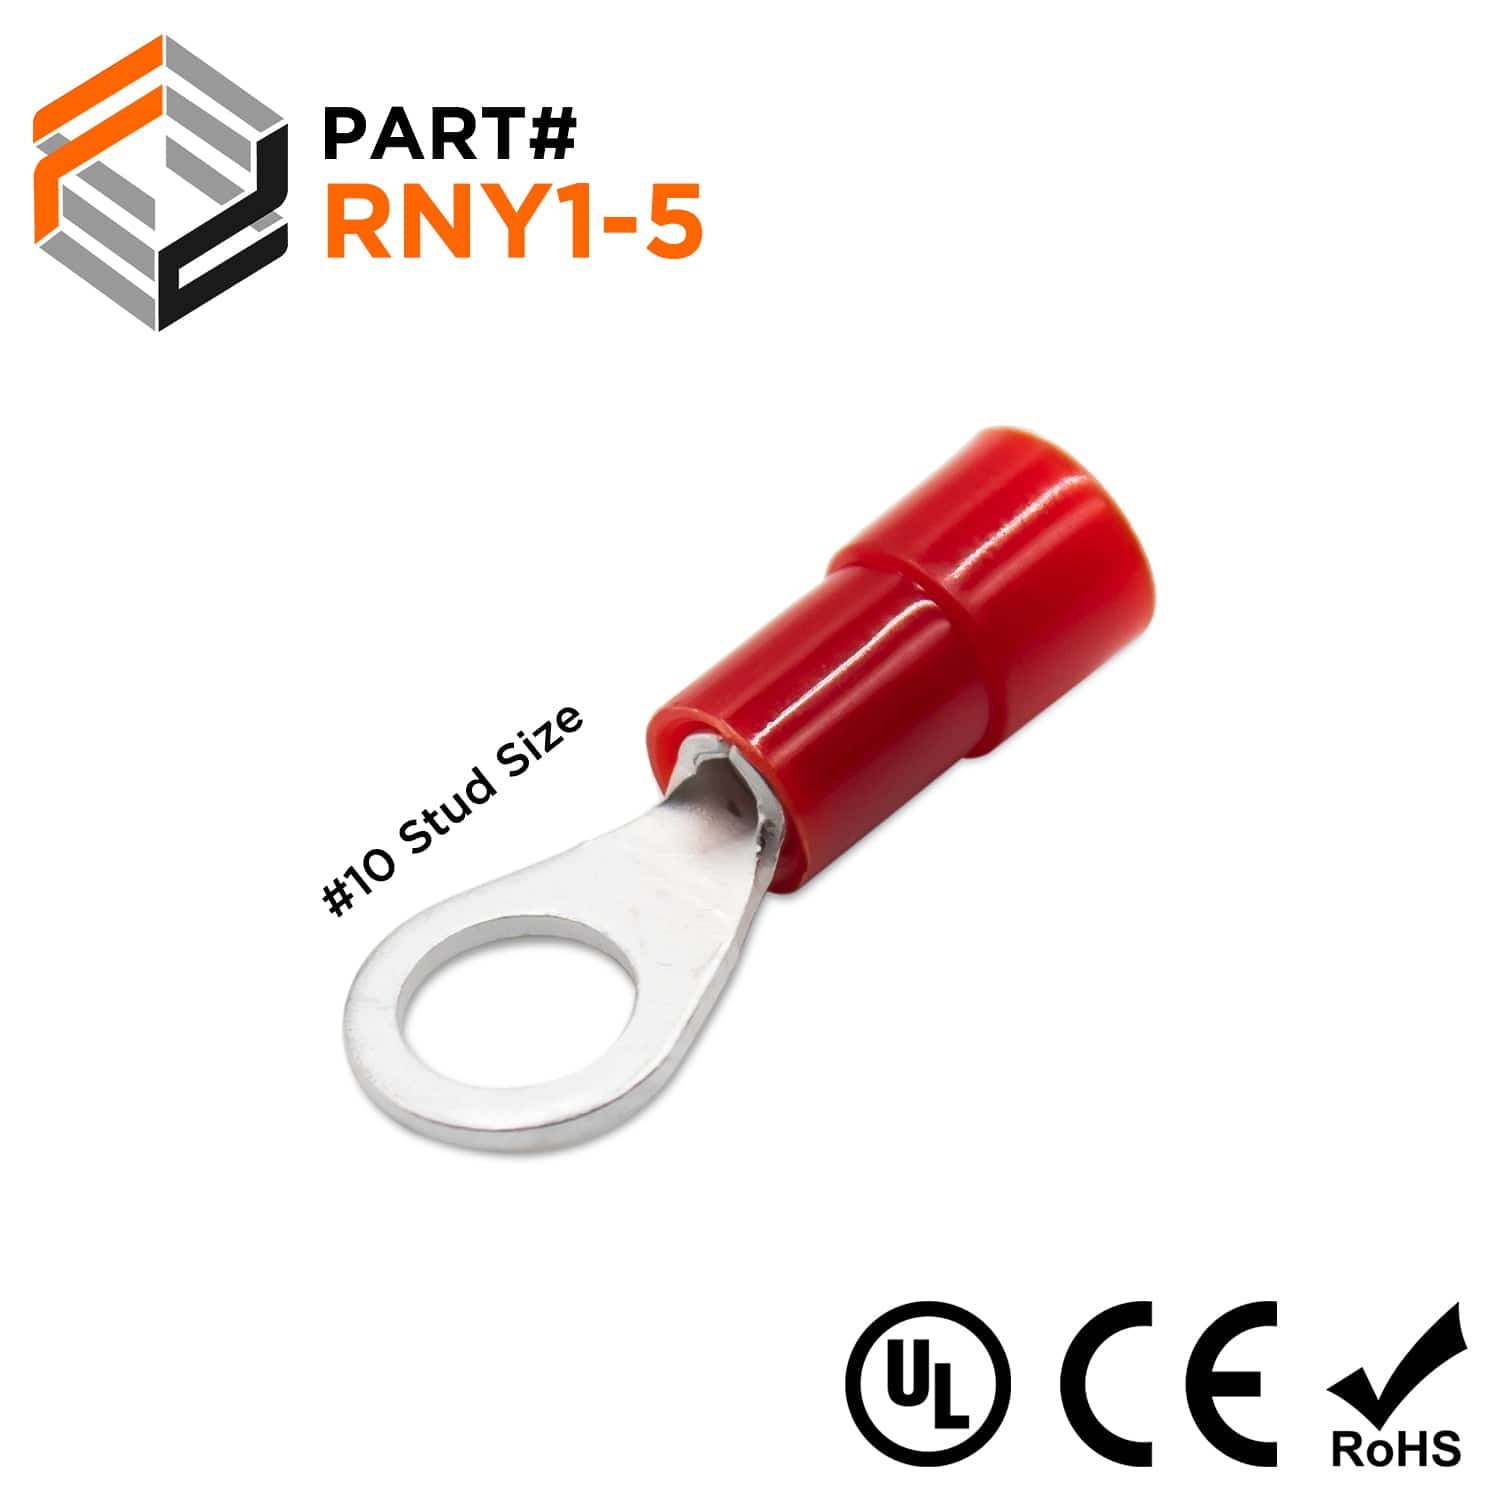 RNY1-5 Nylon Ring Terminals - Standard Crimp 22-16AWG - Stud #10